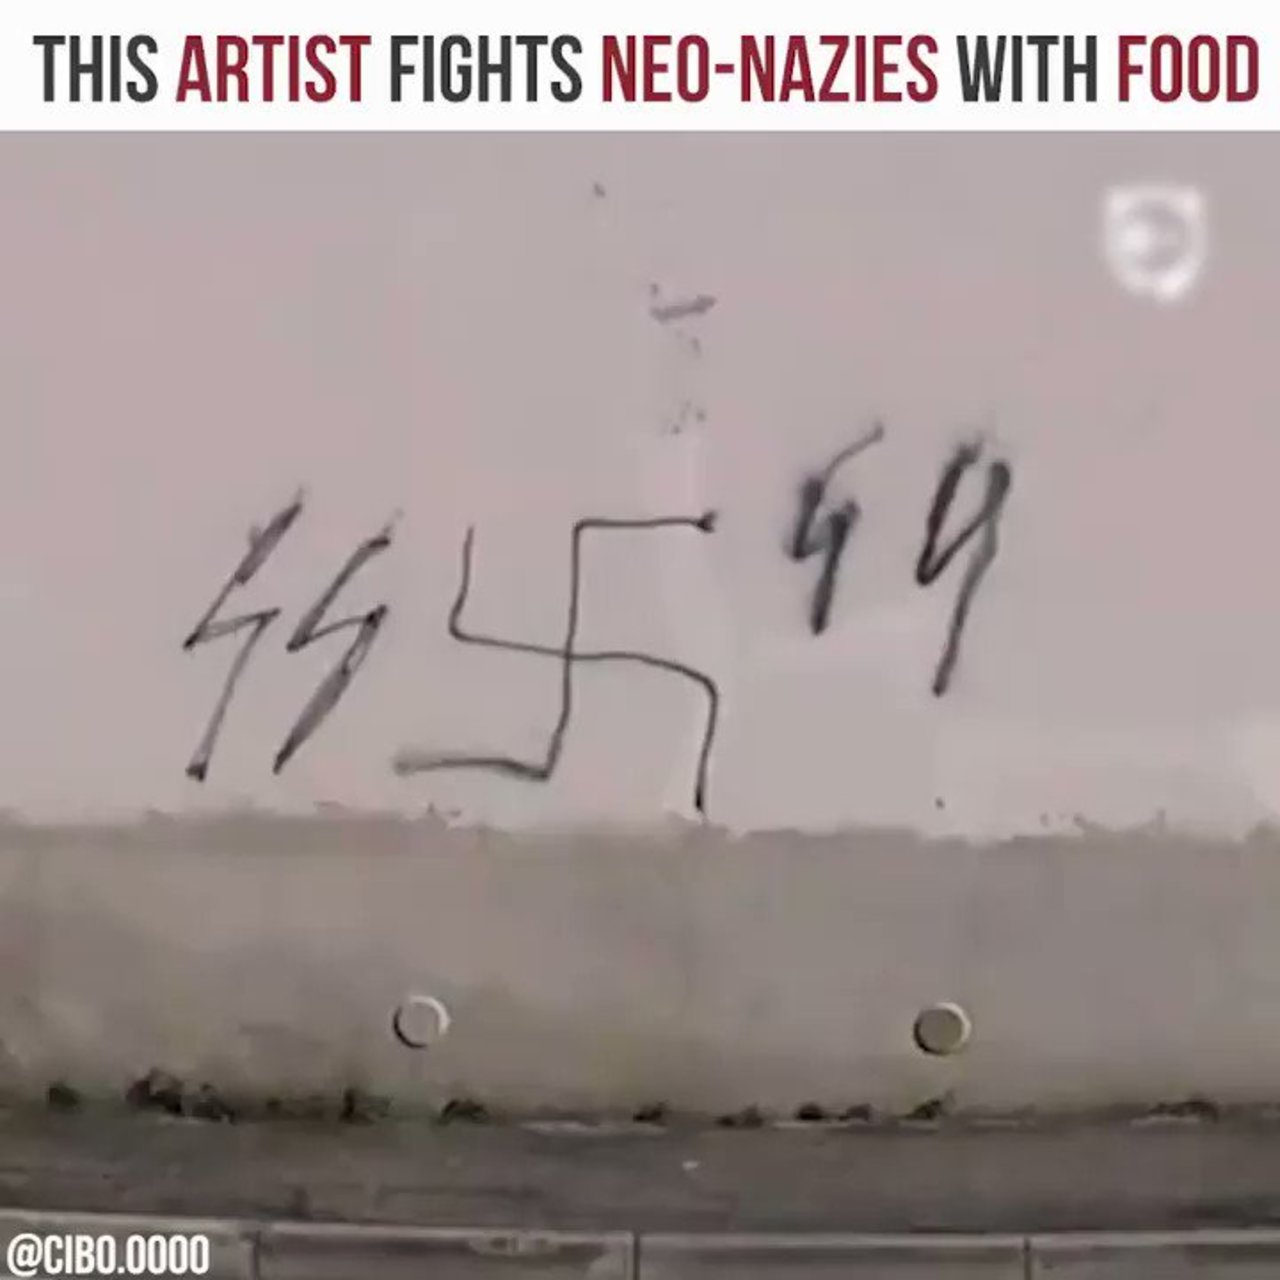 This artist fights neo-nazies with food #art #graffiti Credit: @ cibo.oooo (http://goo.gl/9v6Taz) https://t.co/QtEYU1ZUZG